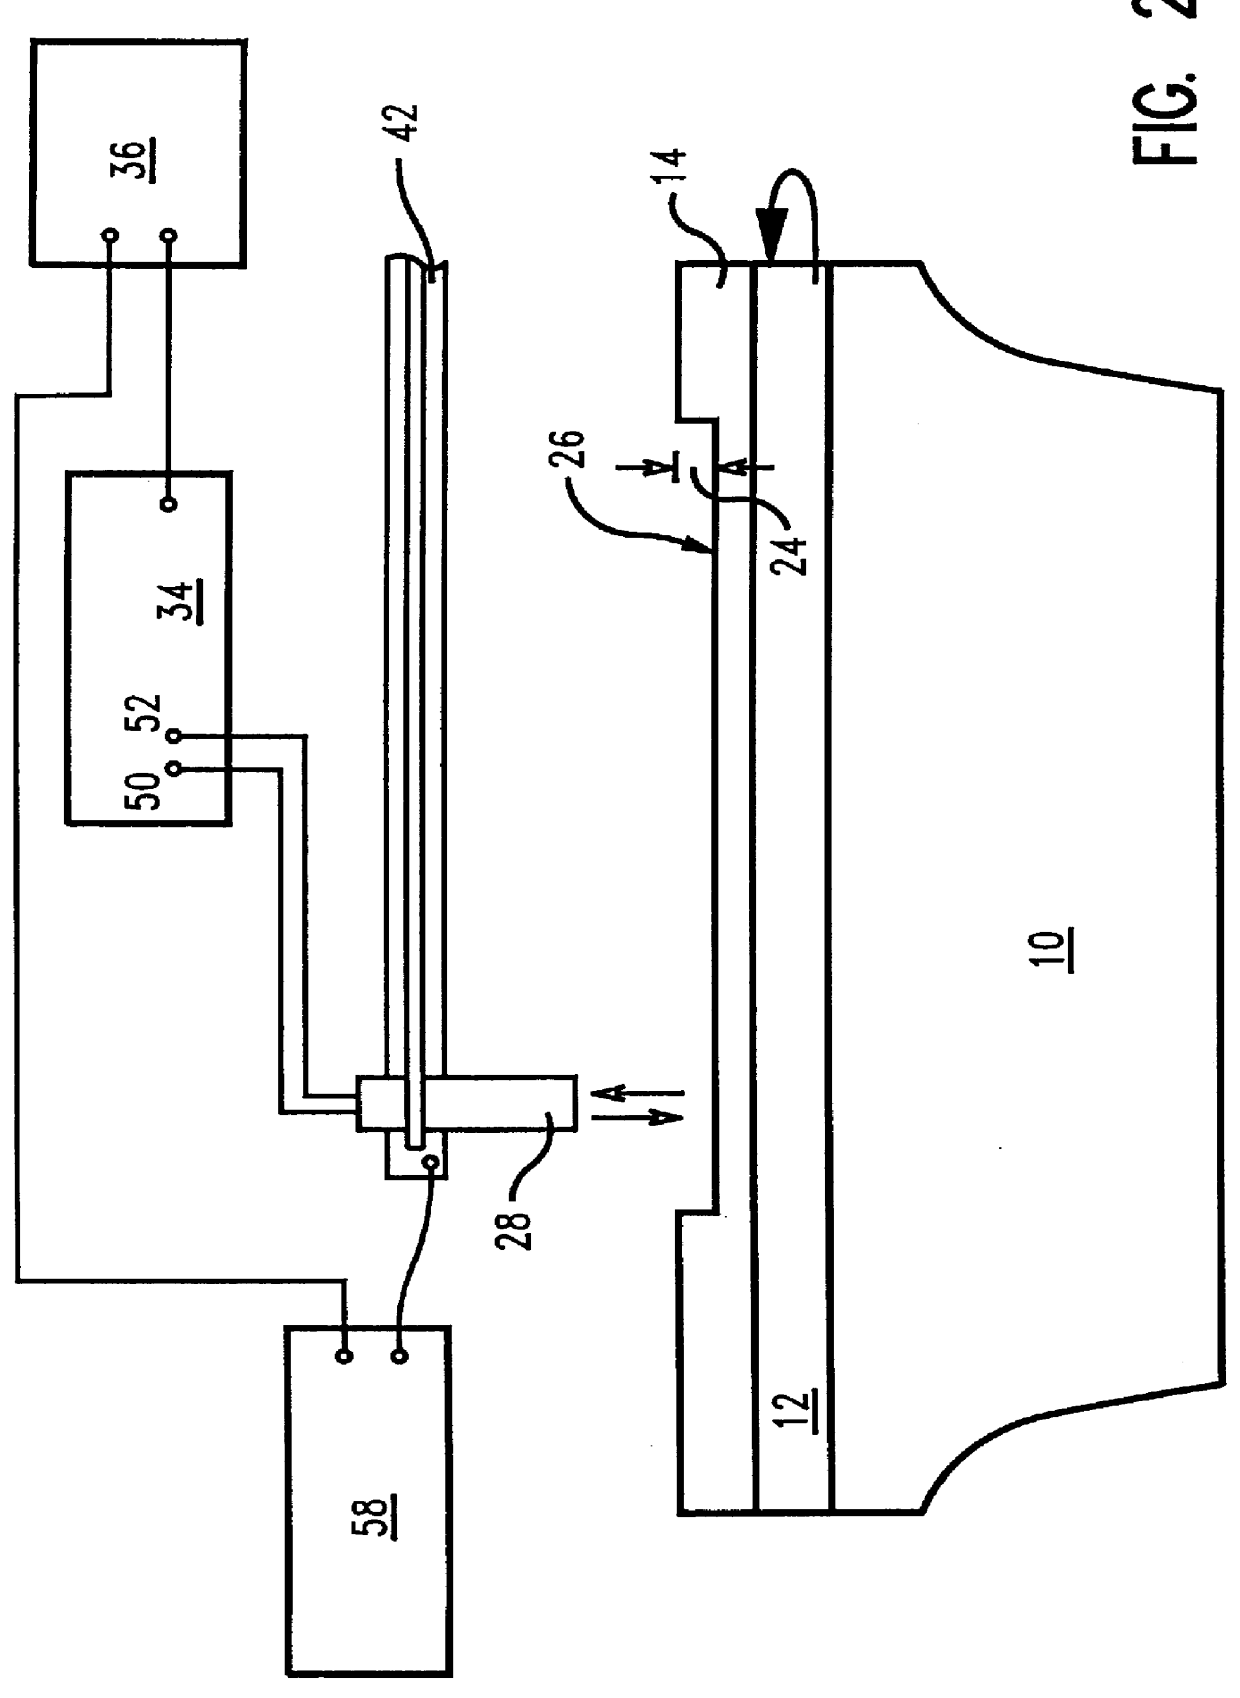 Method and apparatus of monitoring polishing pad wear during processing